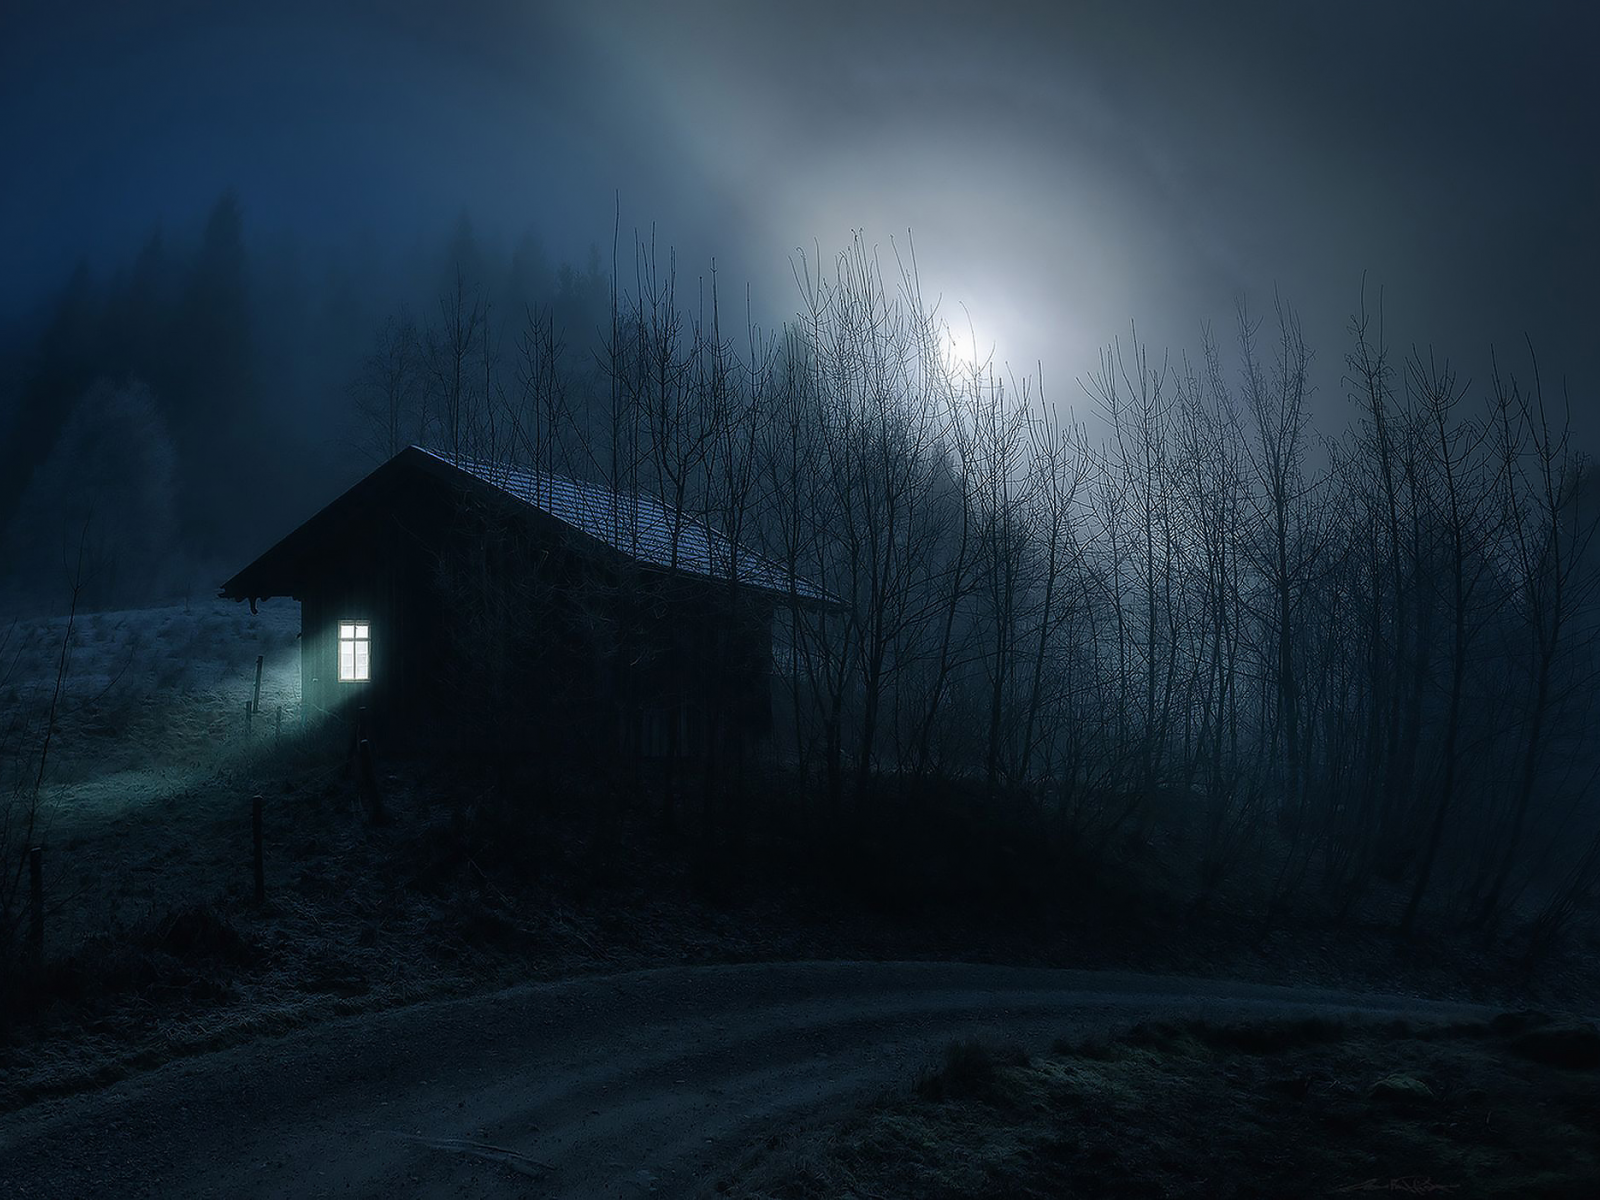 тихая ночь, дом, лес, луна, дорога, stille nacht, house, night, moon, forest, road, see, sky, dark, nice, wide